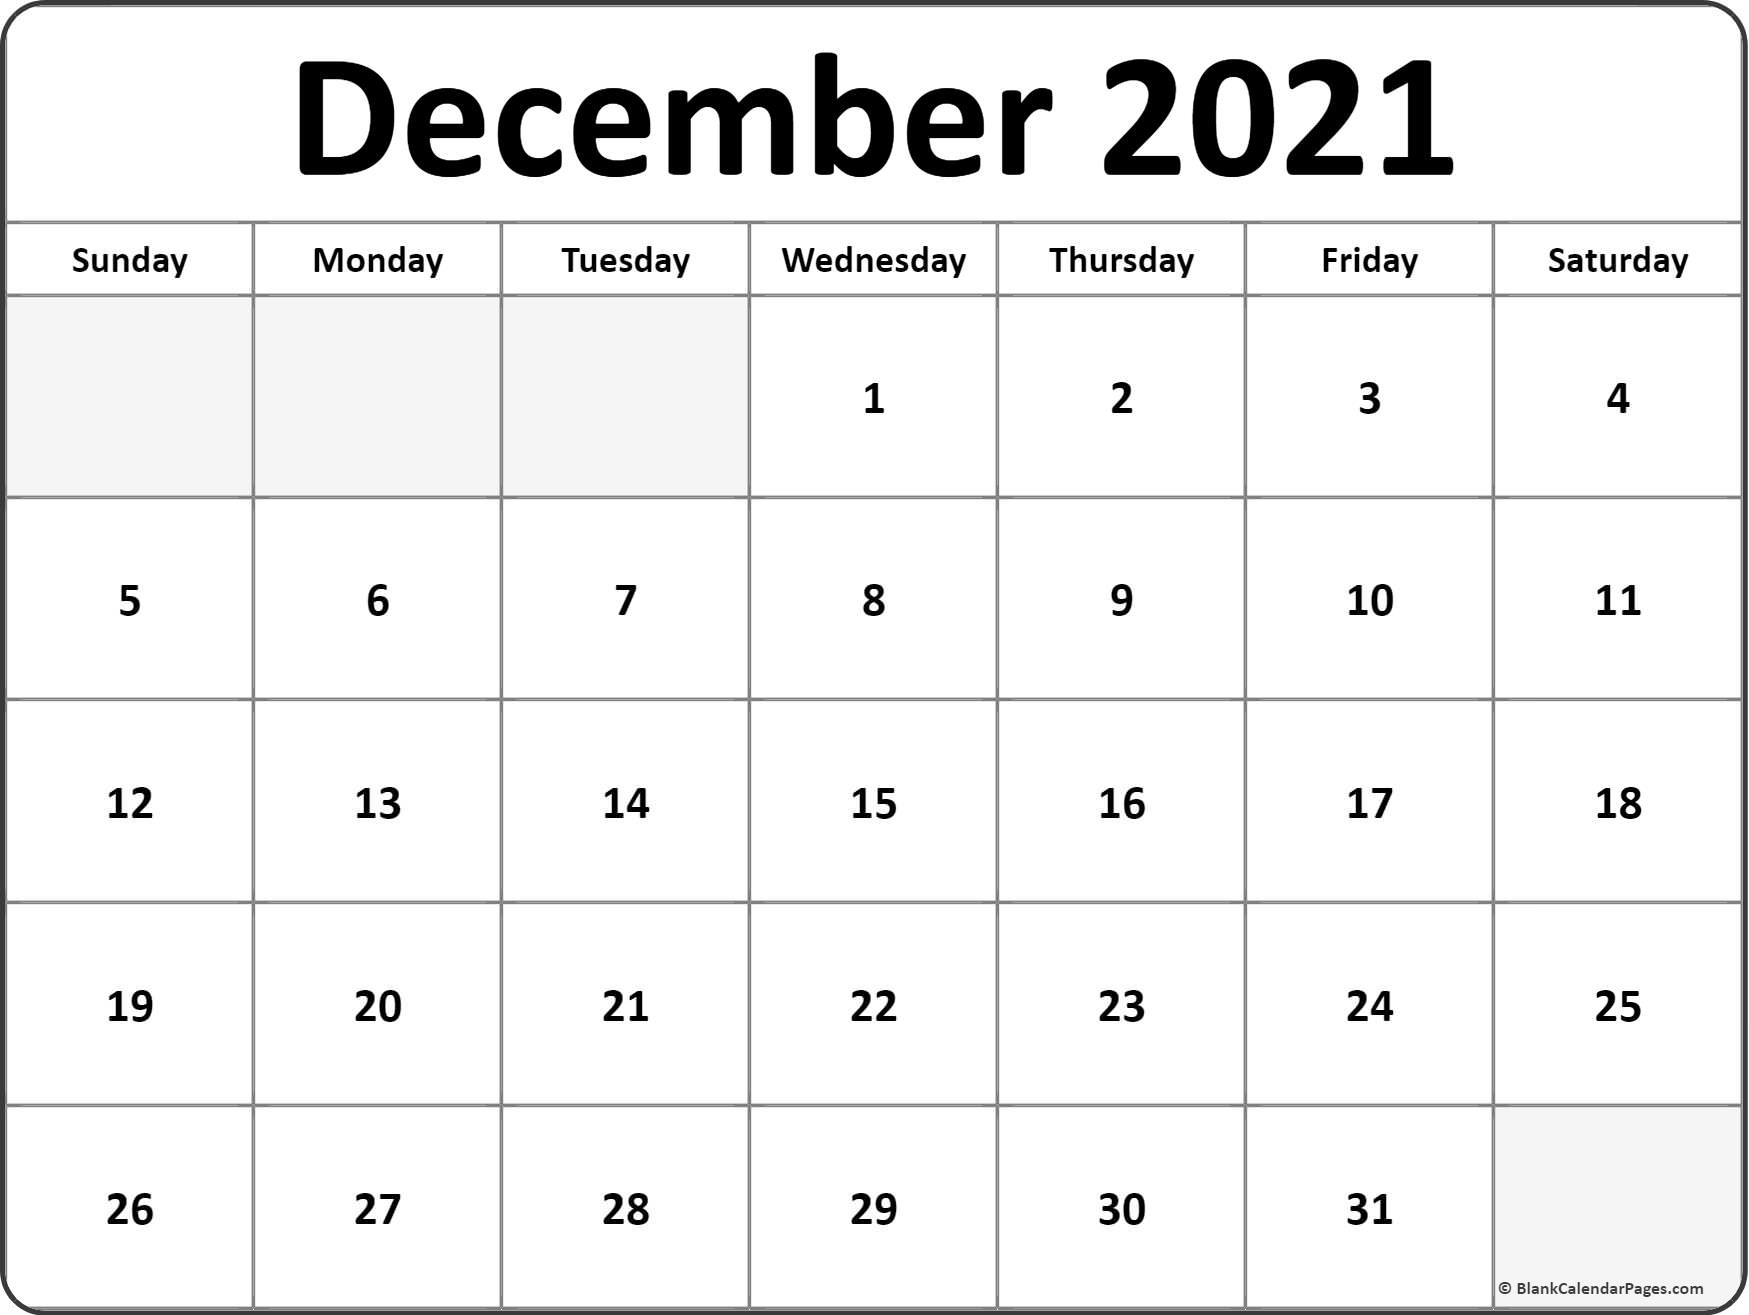 December 2021 Blank Calendar Templates. 2020 December 2021 January Calendar